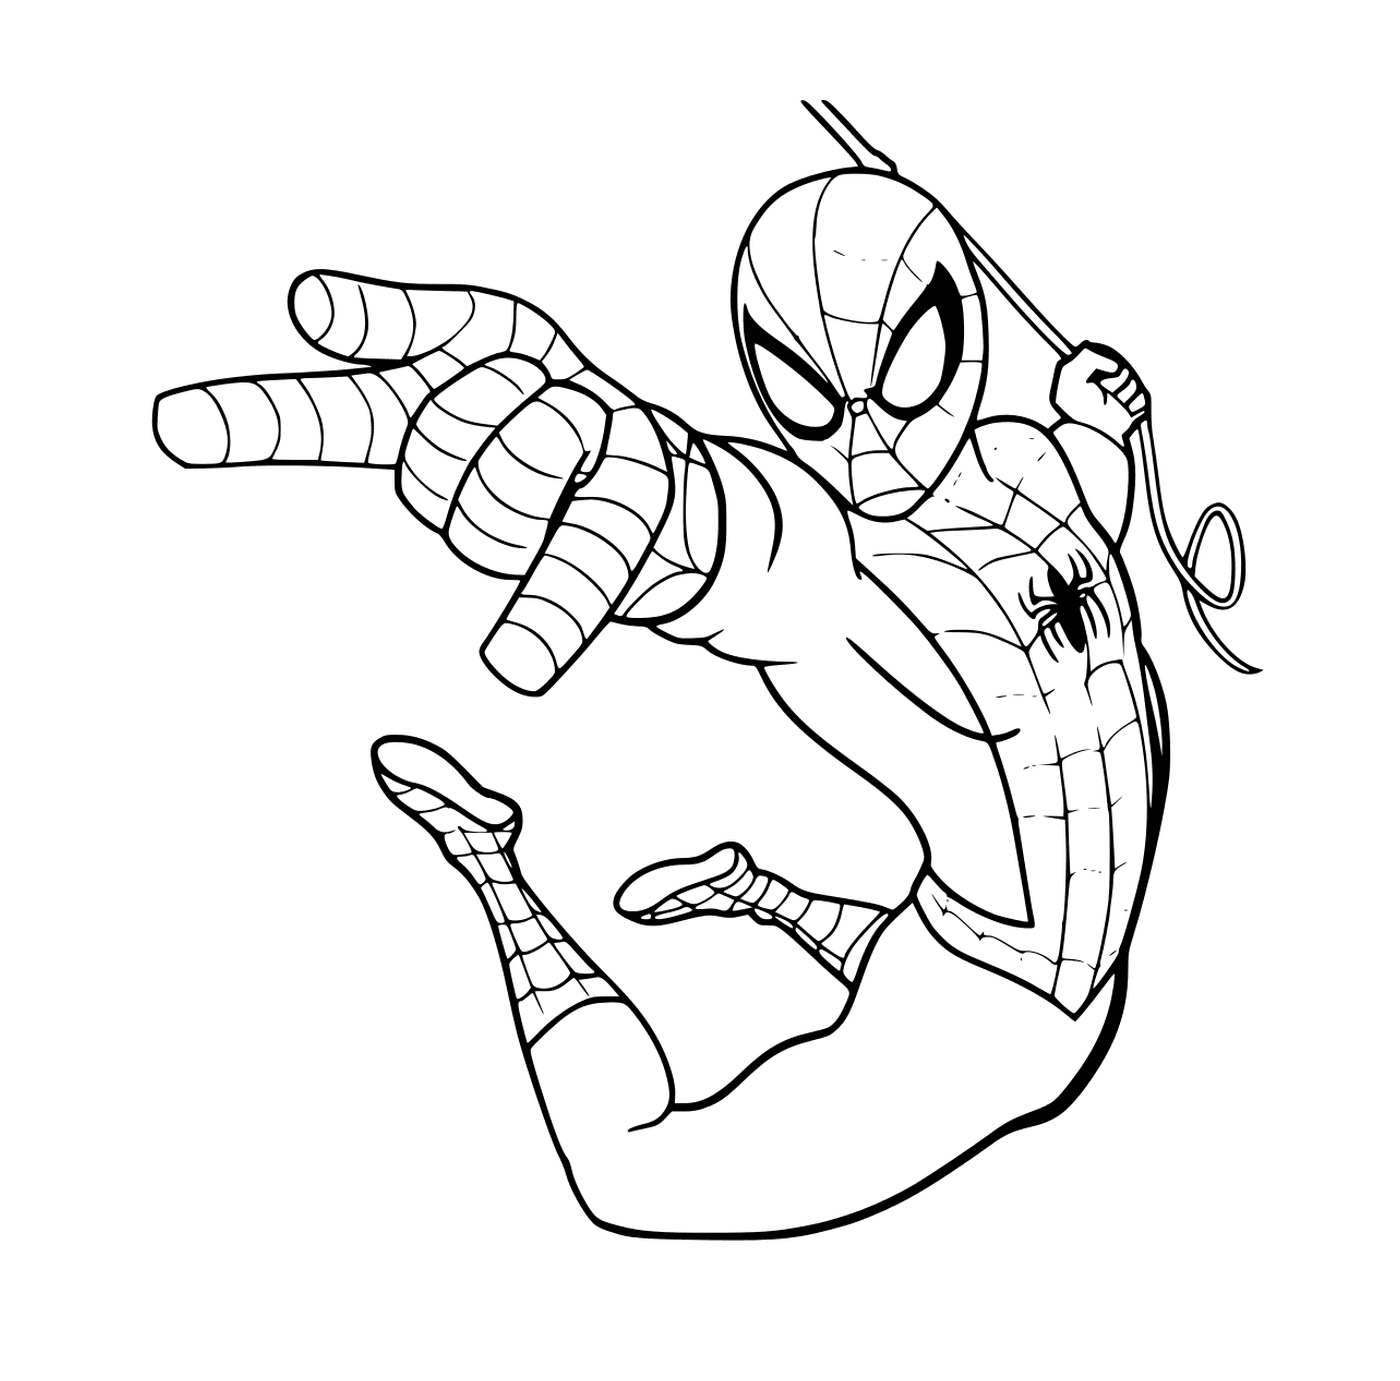 Spiderman in Comic Book Amazing Fantasy